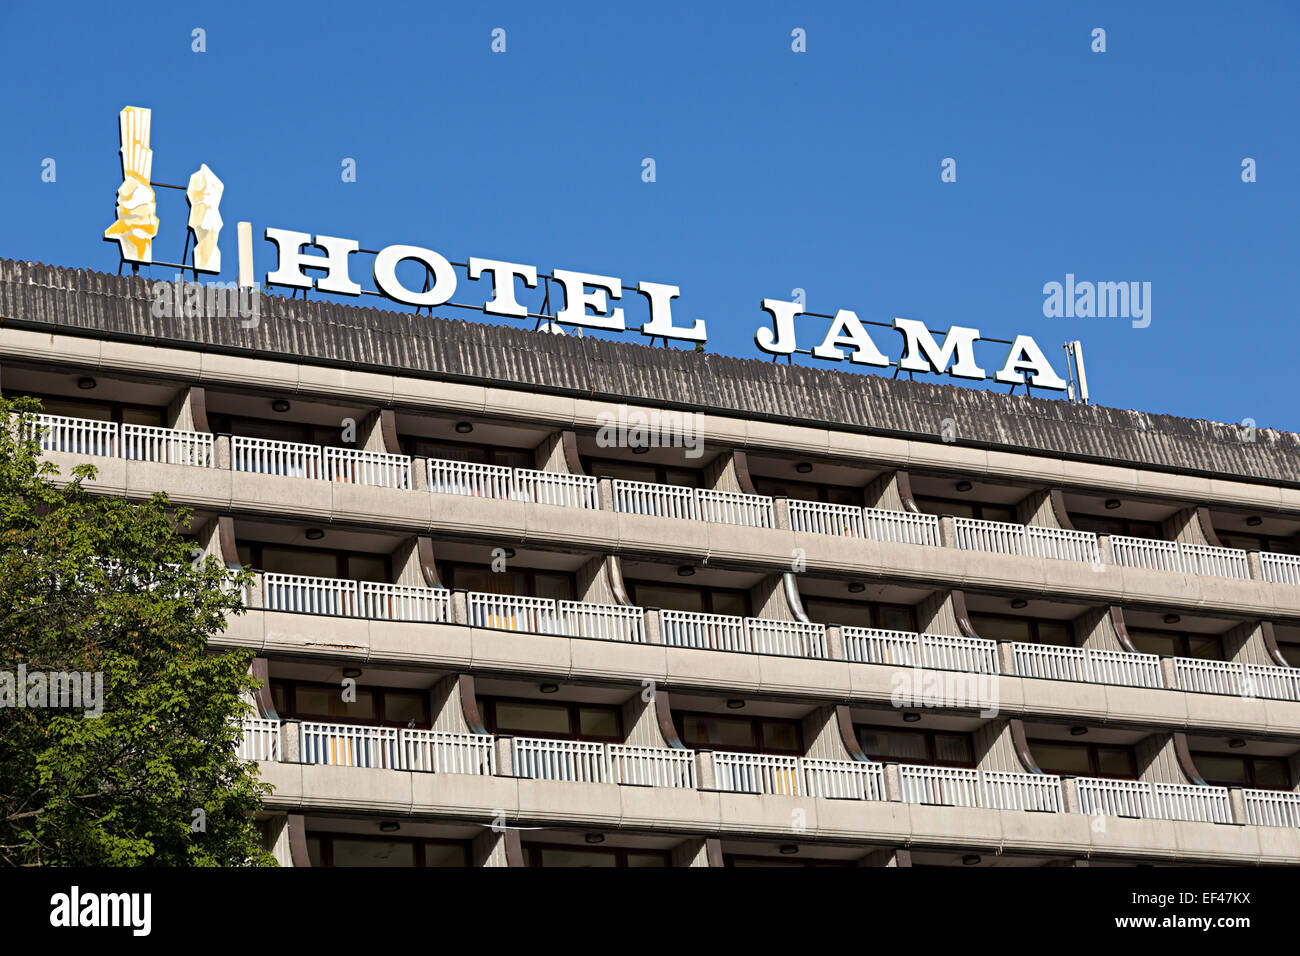 Hotel jama sign, Postojna, Slovenia Stock Photo